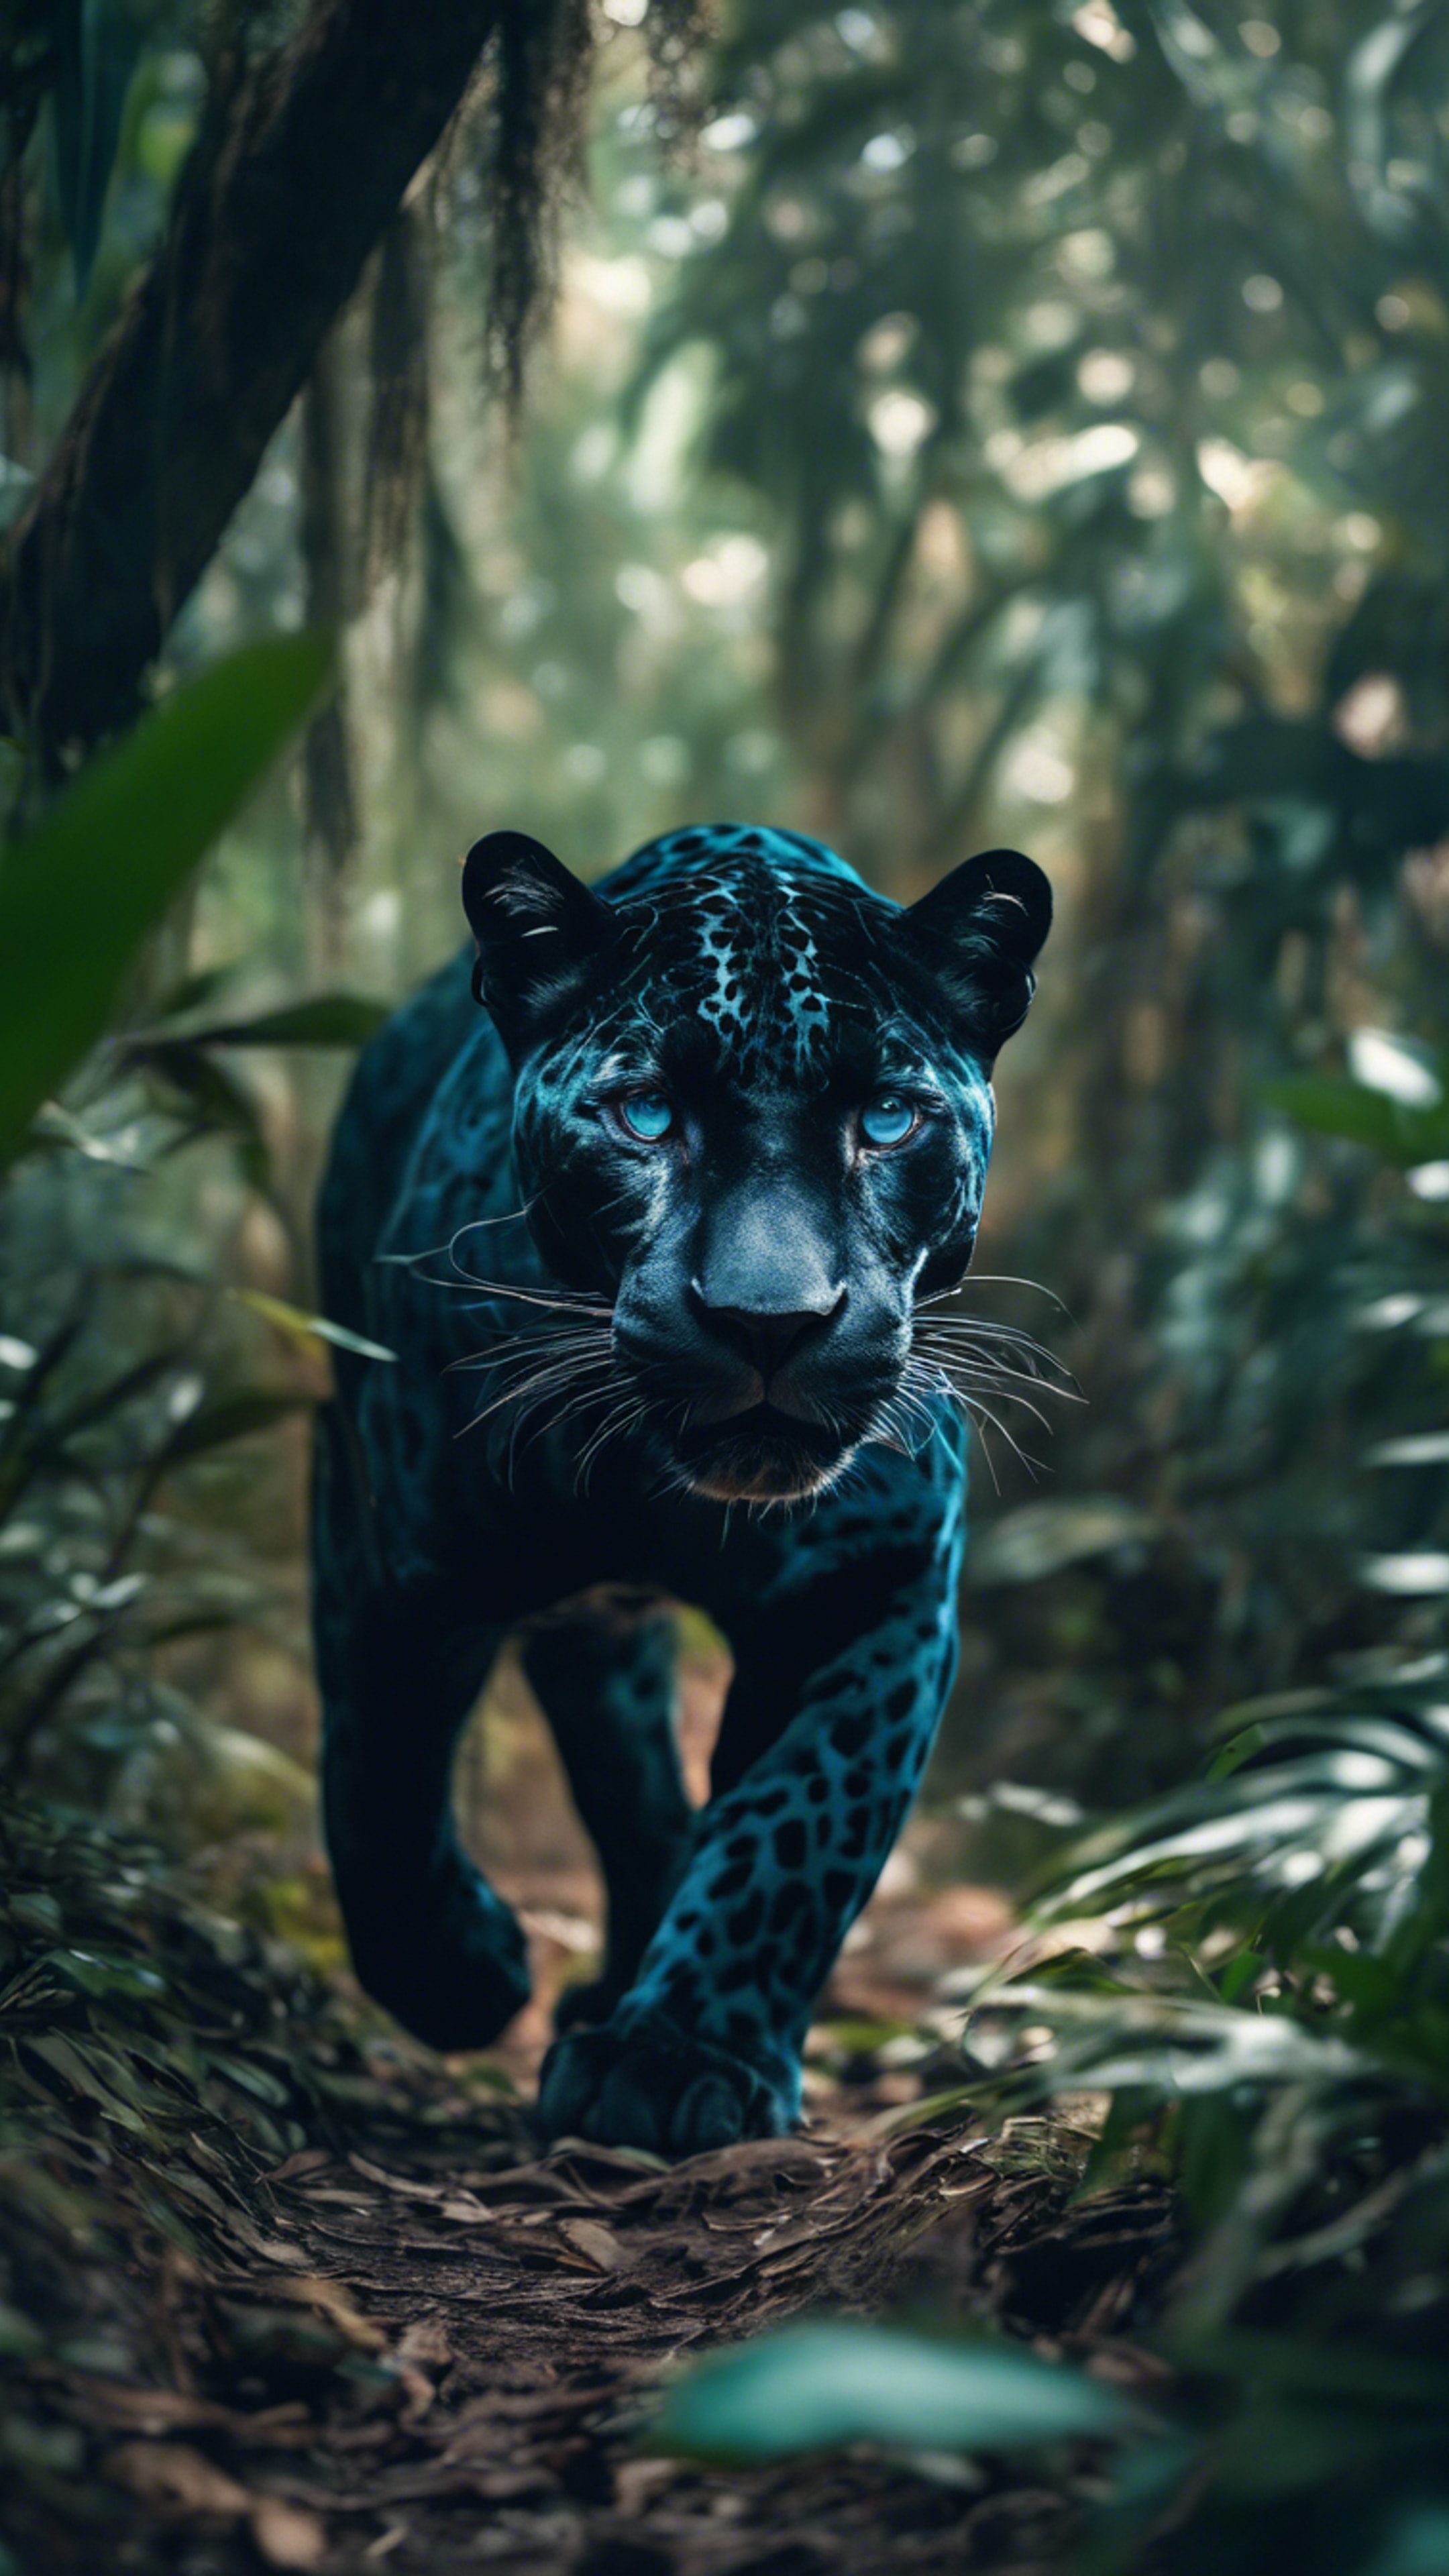 A black jaguar, eyes glowing with cool neon blue hues, prowling through a dark jungle. Шпалери[06d4596780d7432e9648]